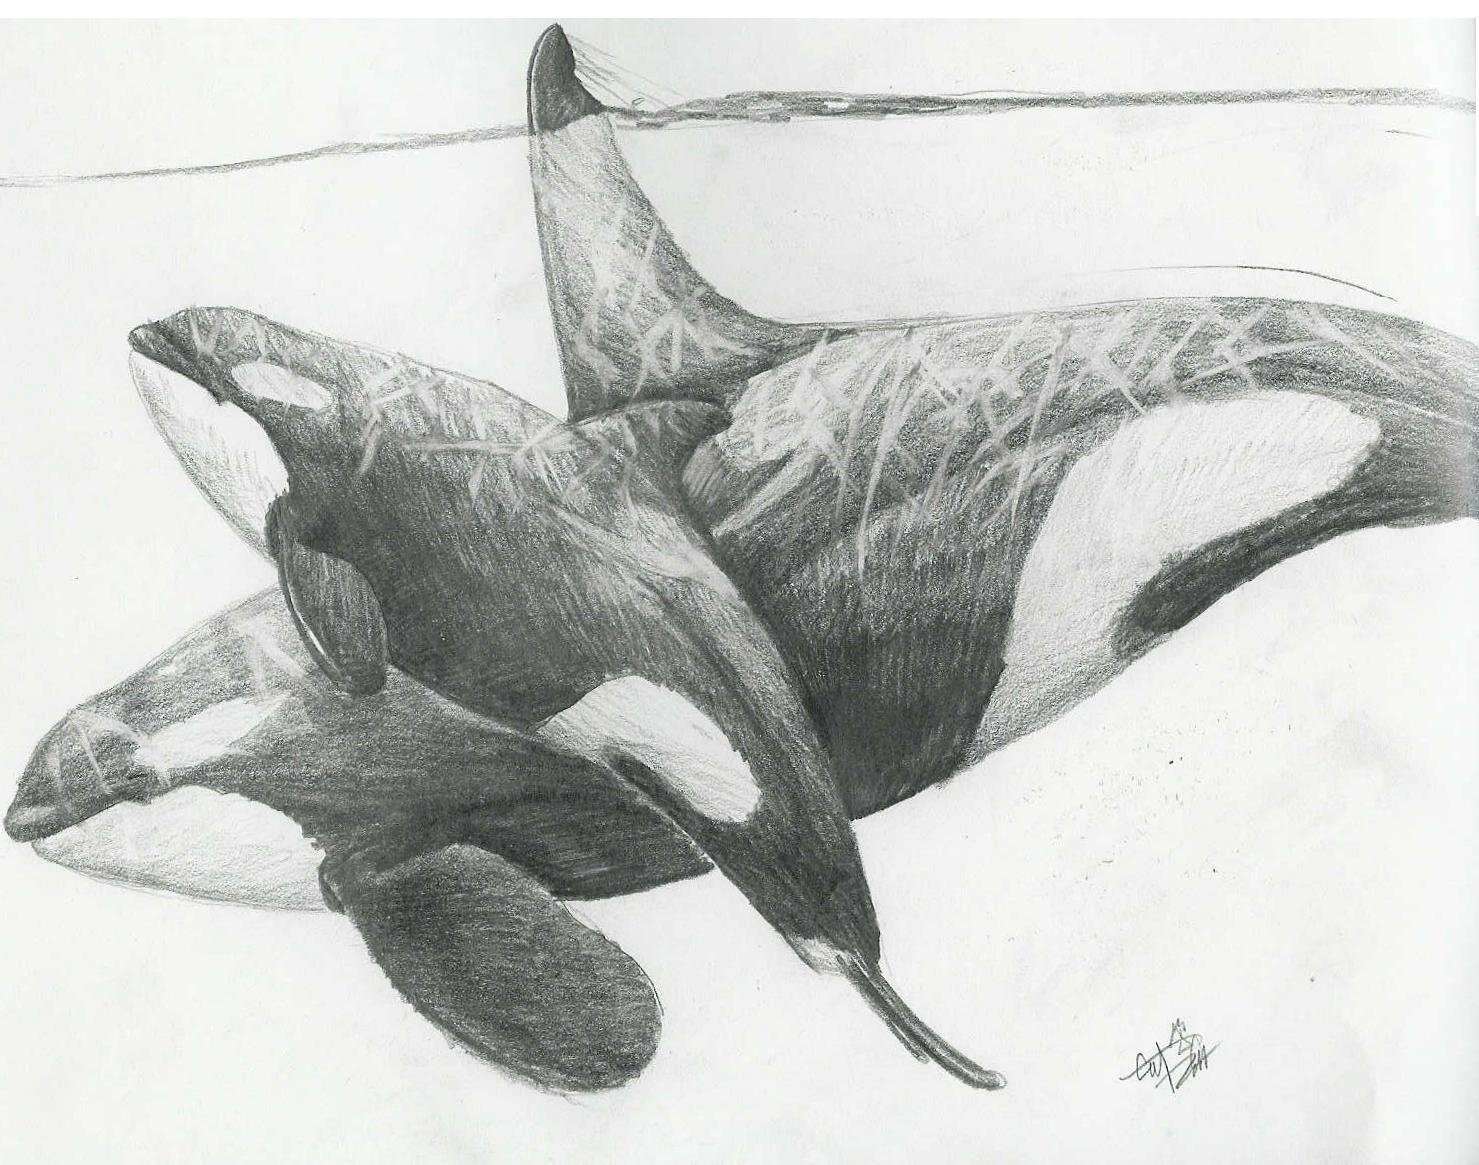 Orca Sketch at Explore collection of Orca Sketch